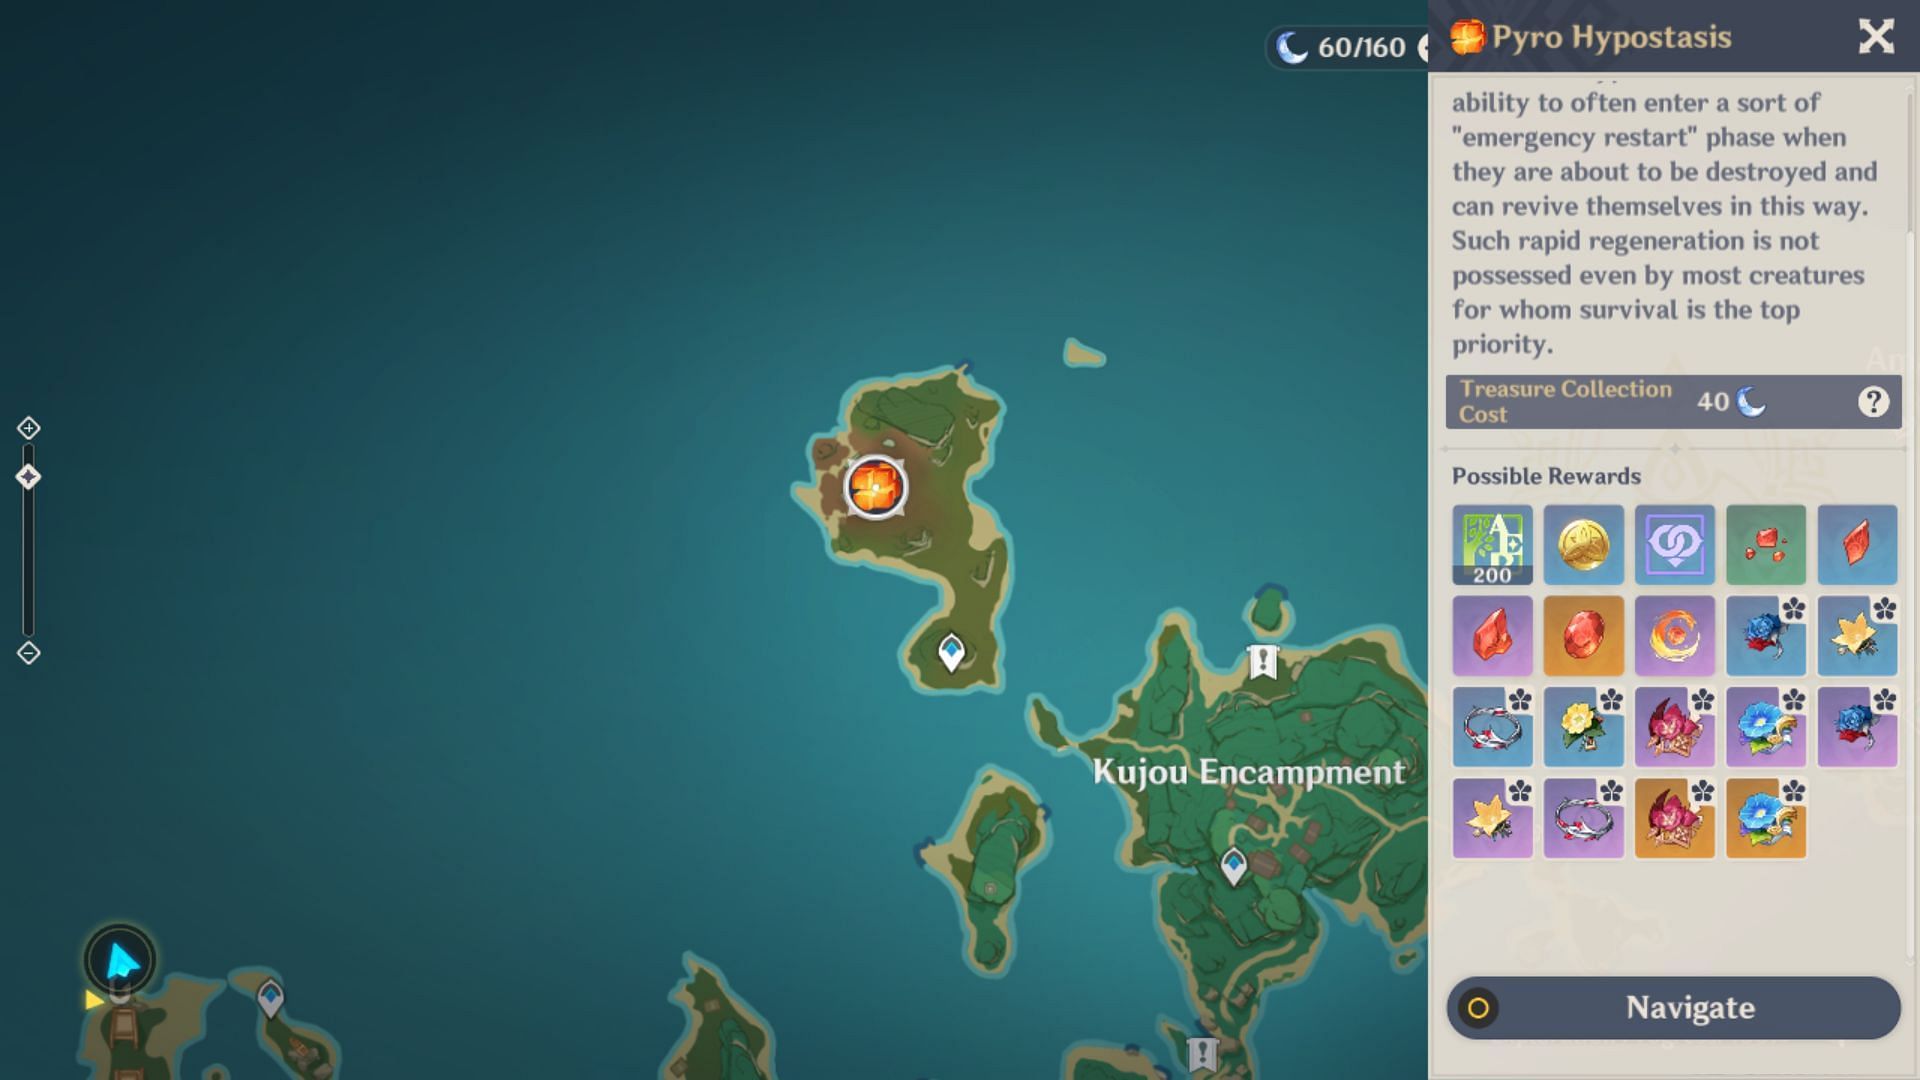 Pyro Hypostasis map location and rewards (Image via Genshin Impact)